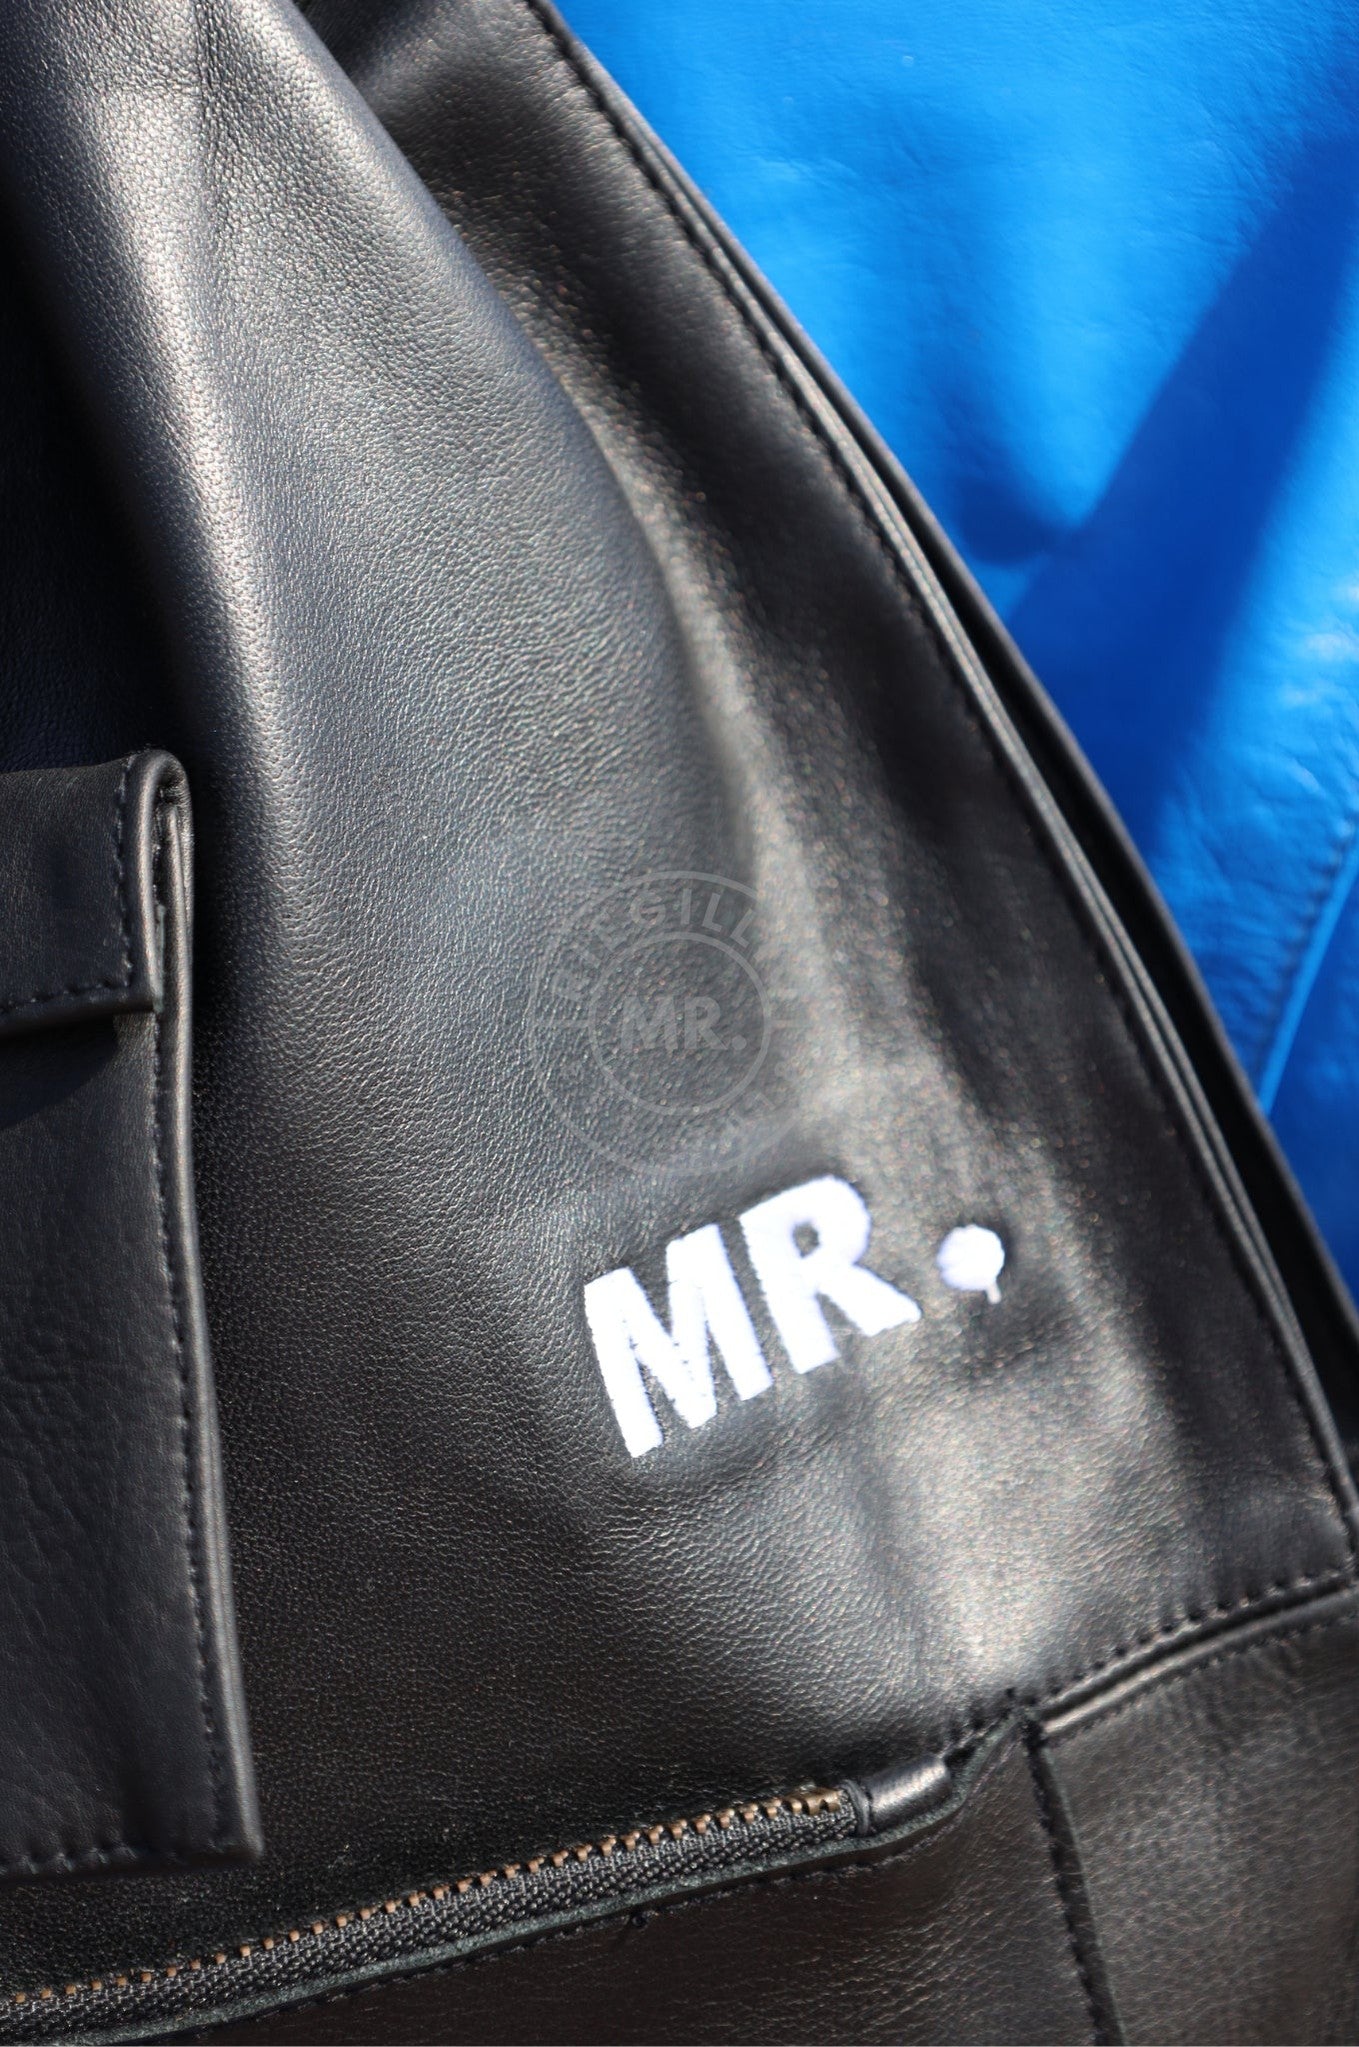 Leather Backpack Full Black at MR. Riegillio